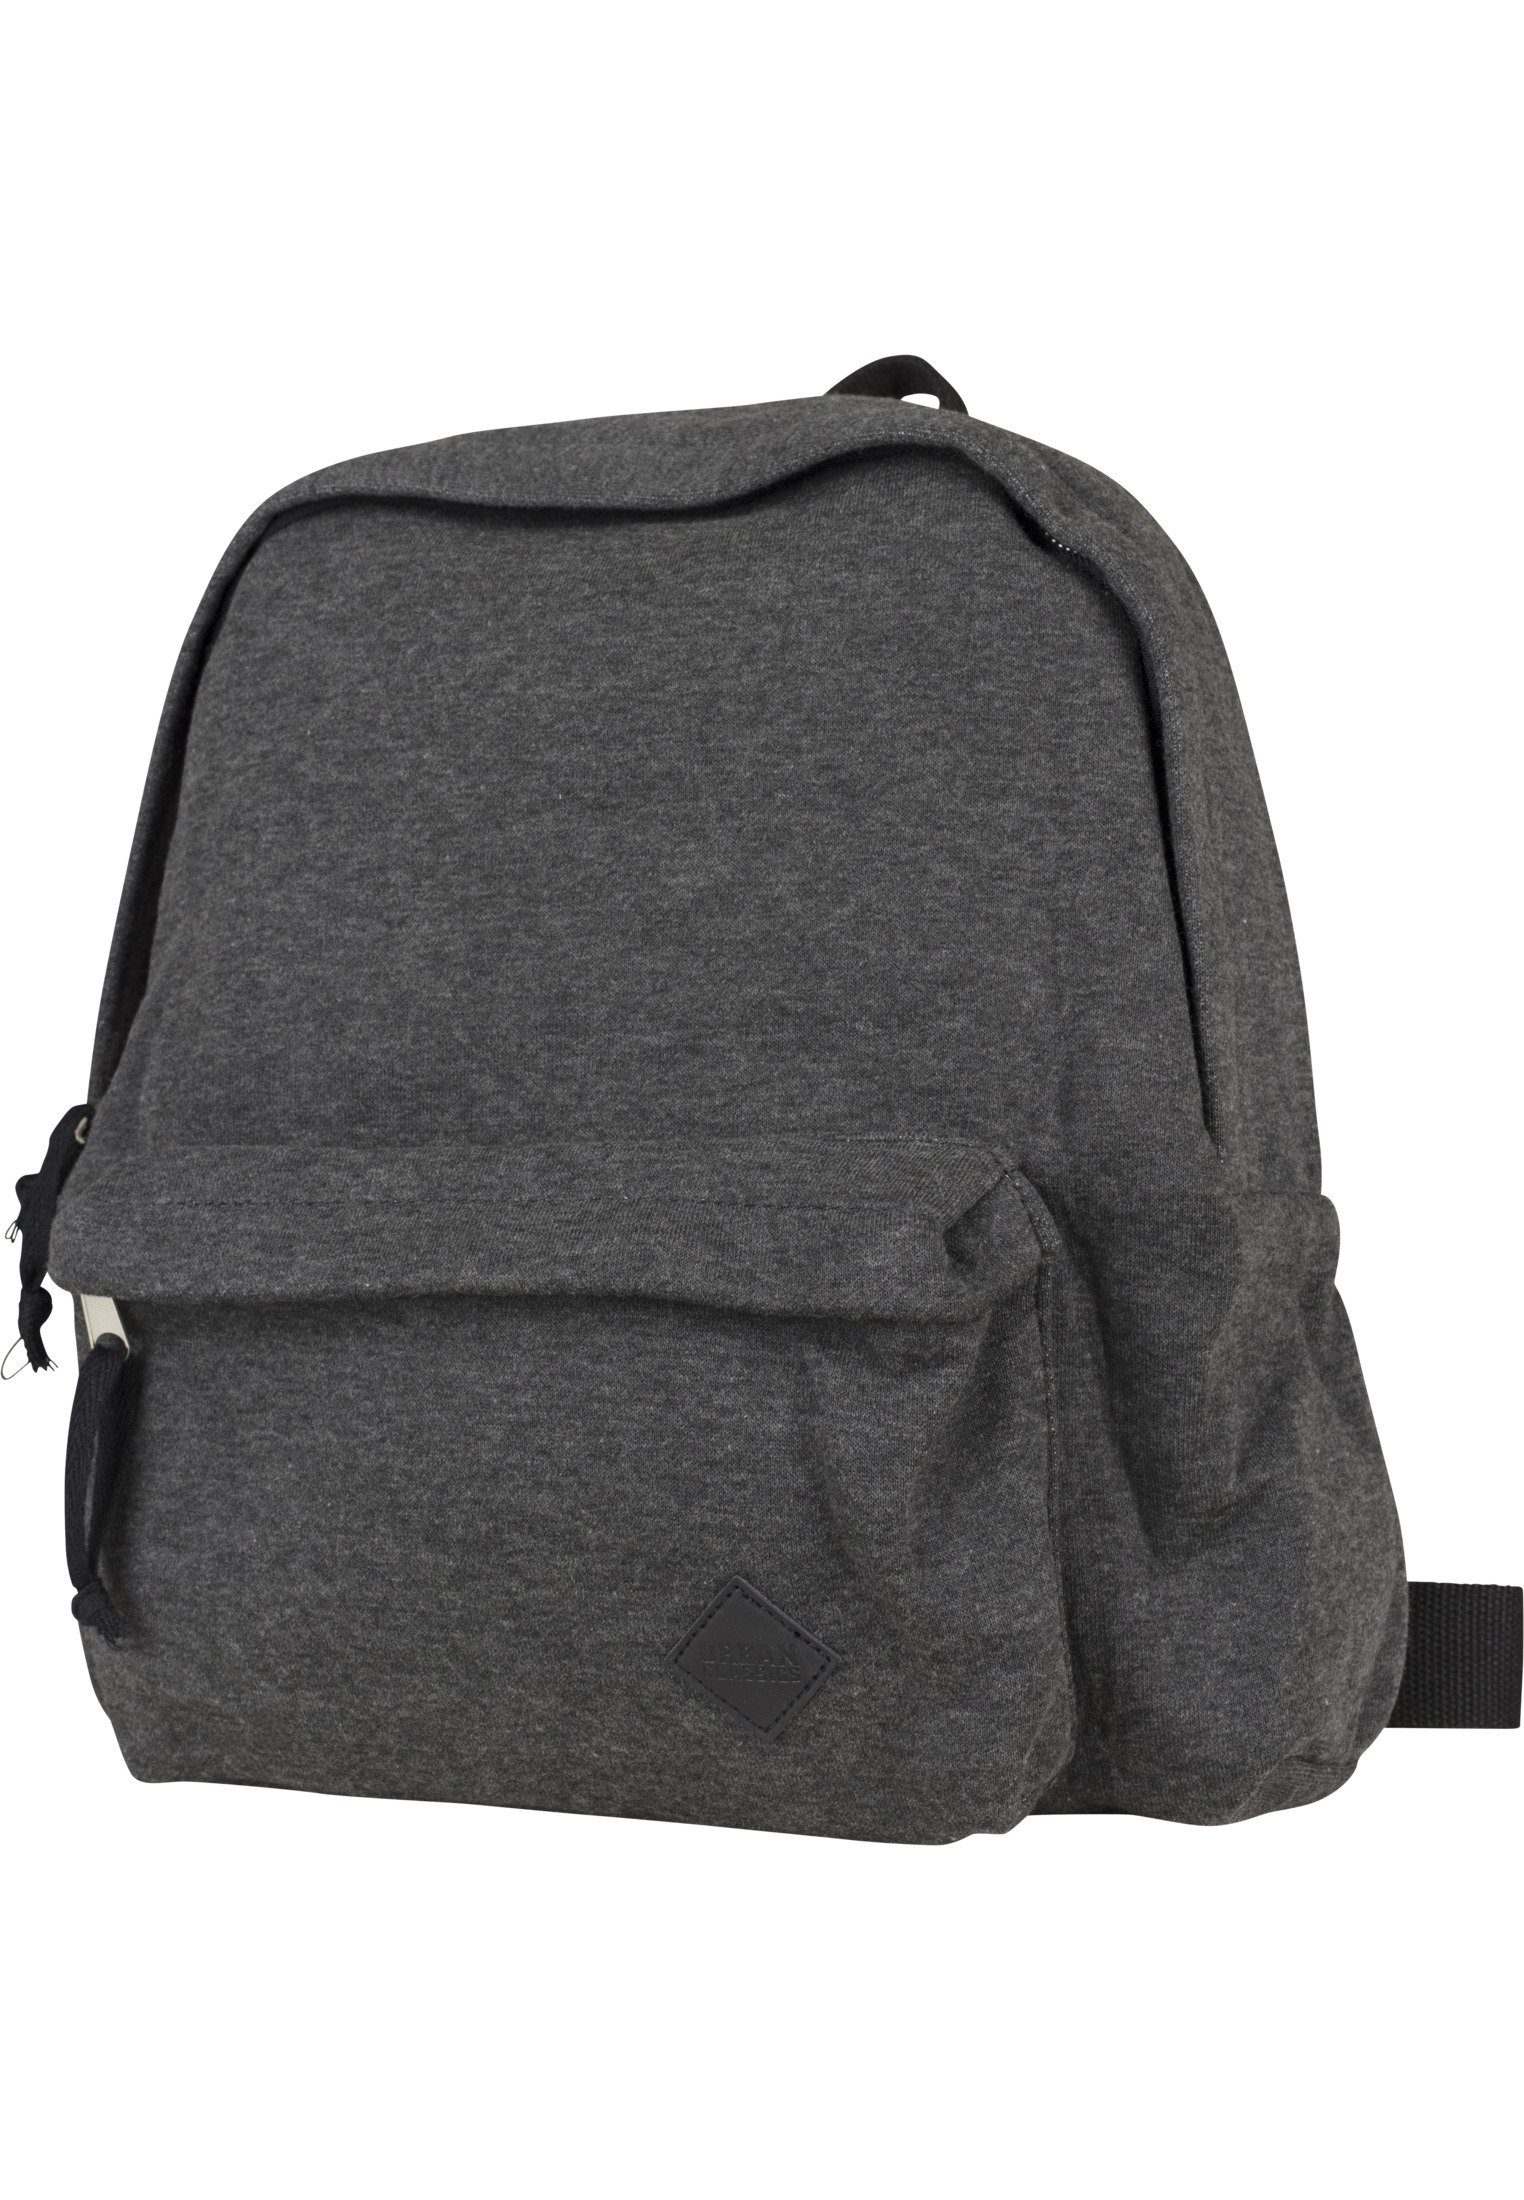 Sweat Unisex CLASSICS charcoal/black Rucksack Backpack URBAN